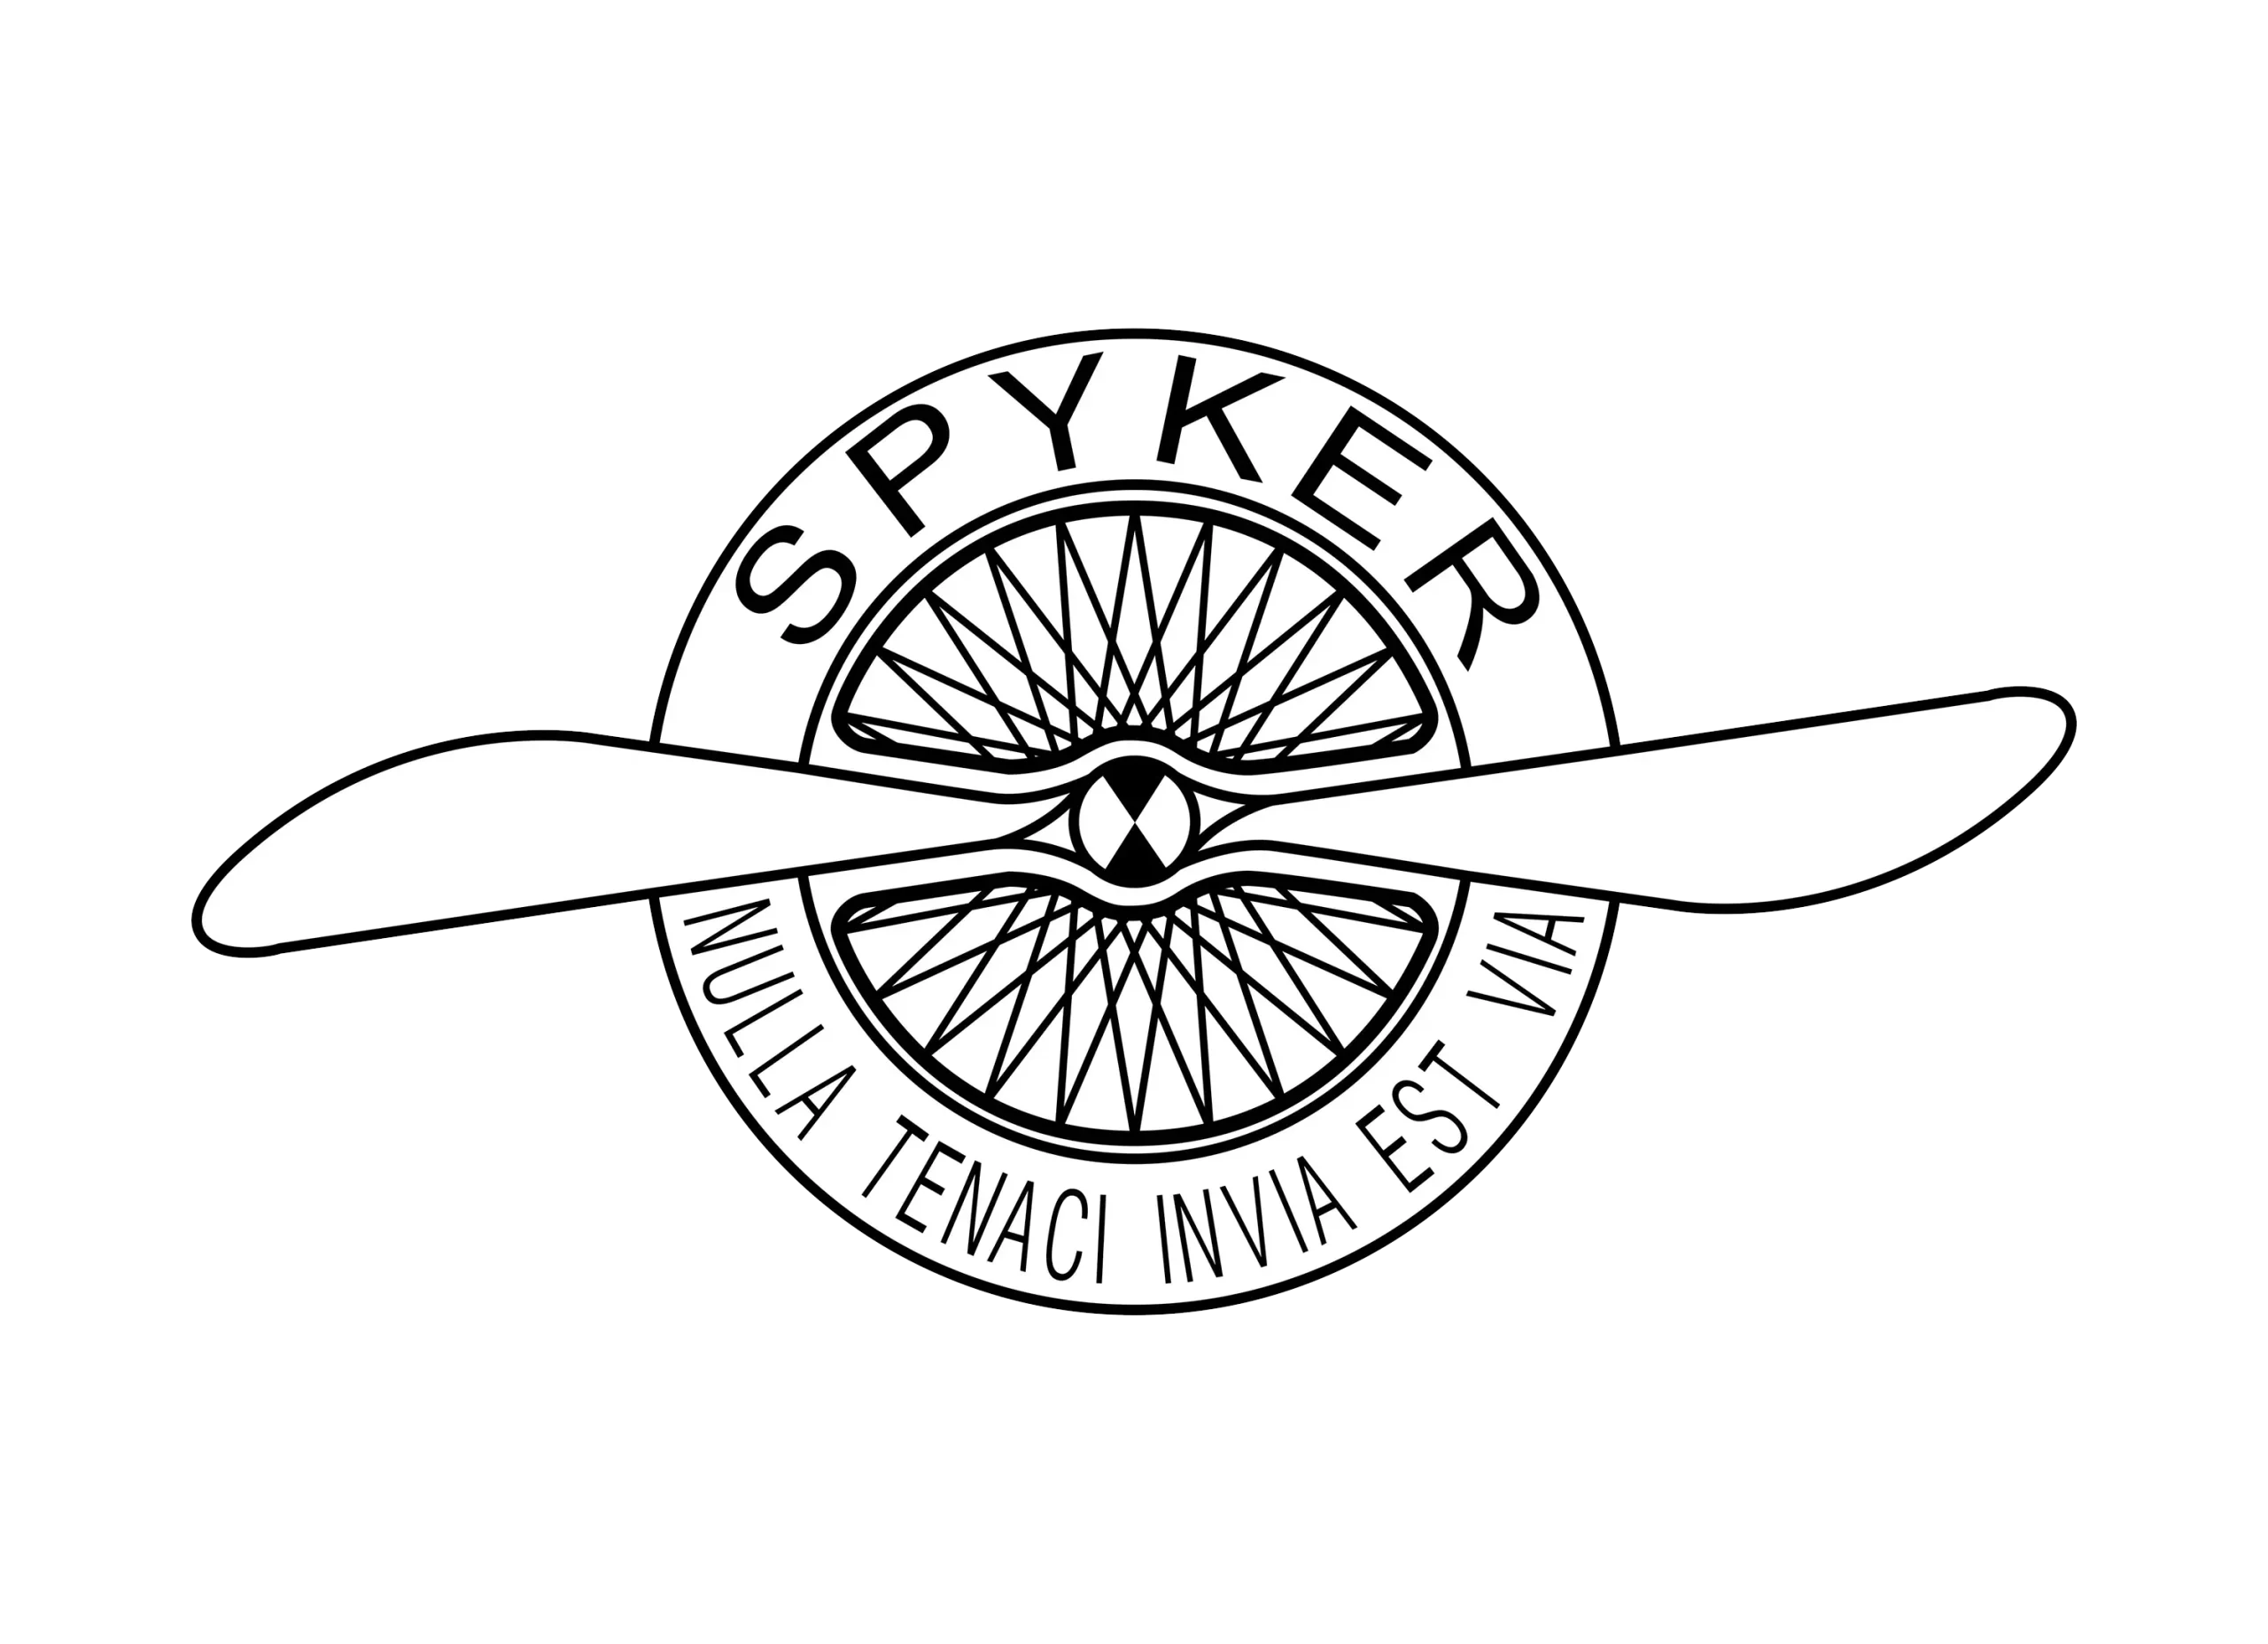 Spyker logo 1999-present